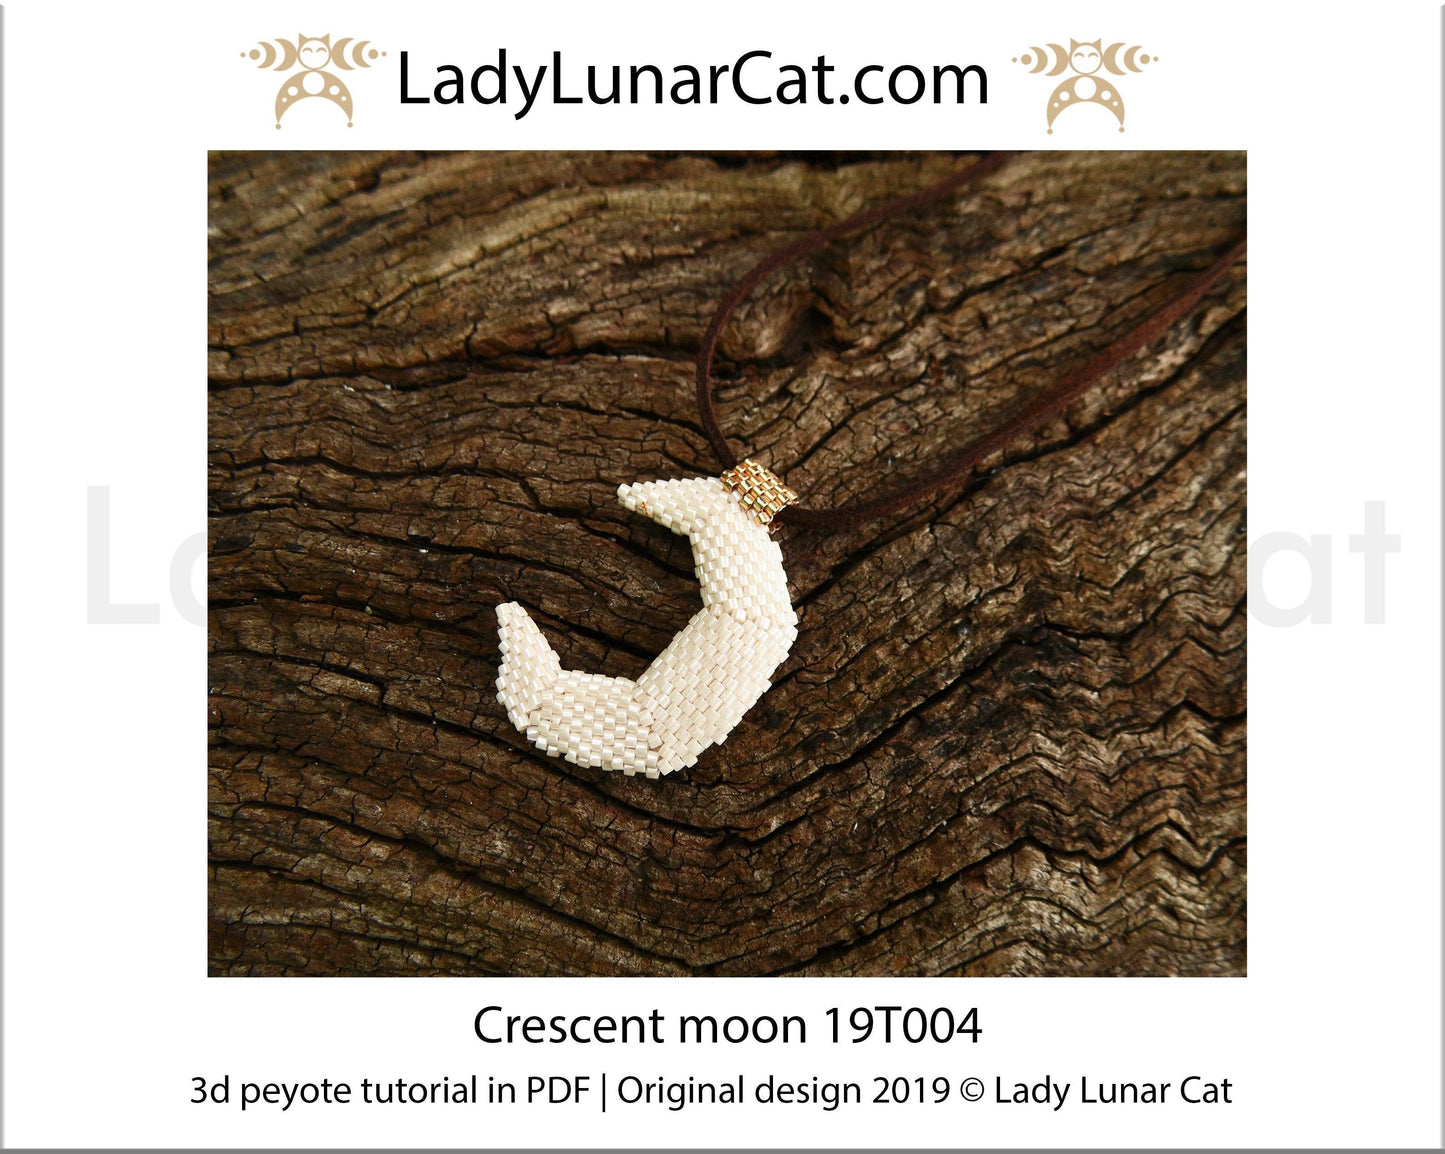 Beading tutorial for 3d peyote stitch Crescent moon celestial 19T004 LadyLunarCat